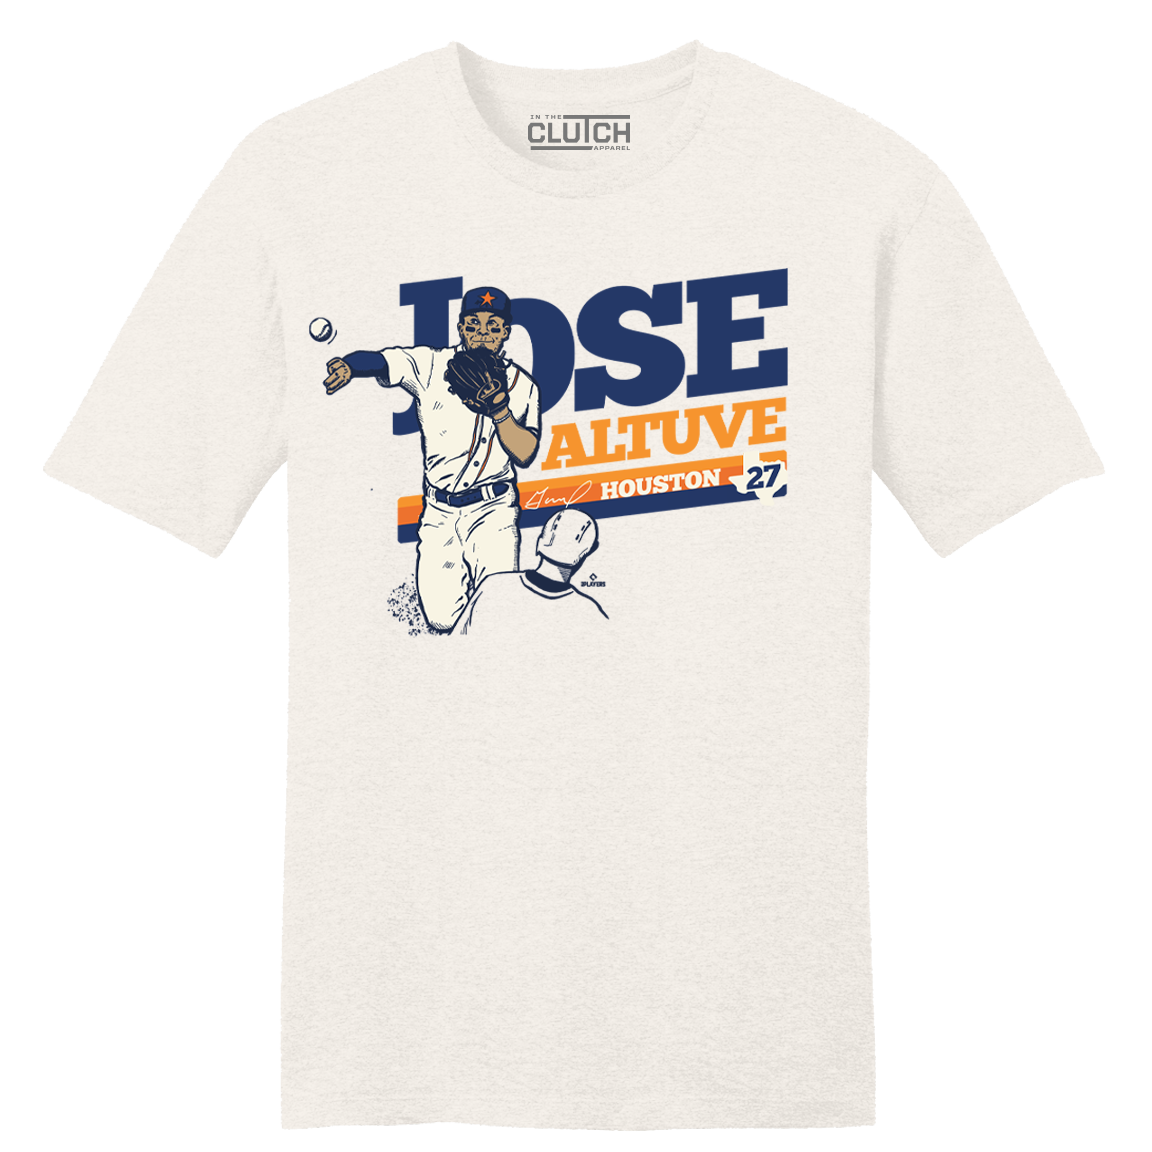 Official José Altuve MLBPA Tee White